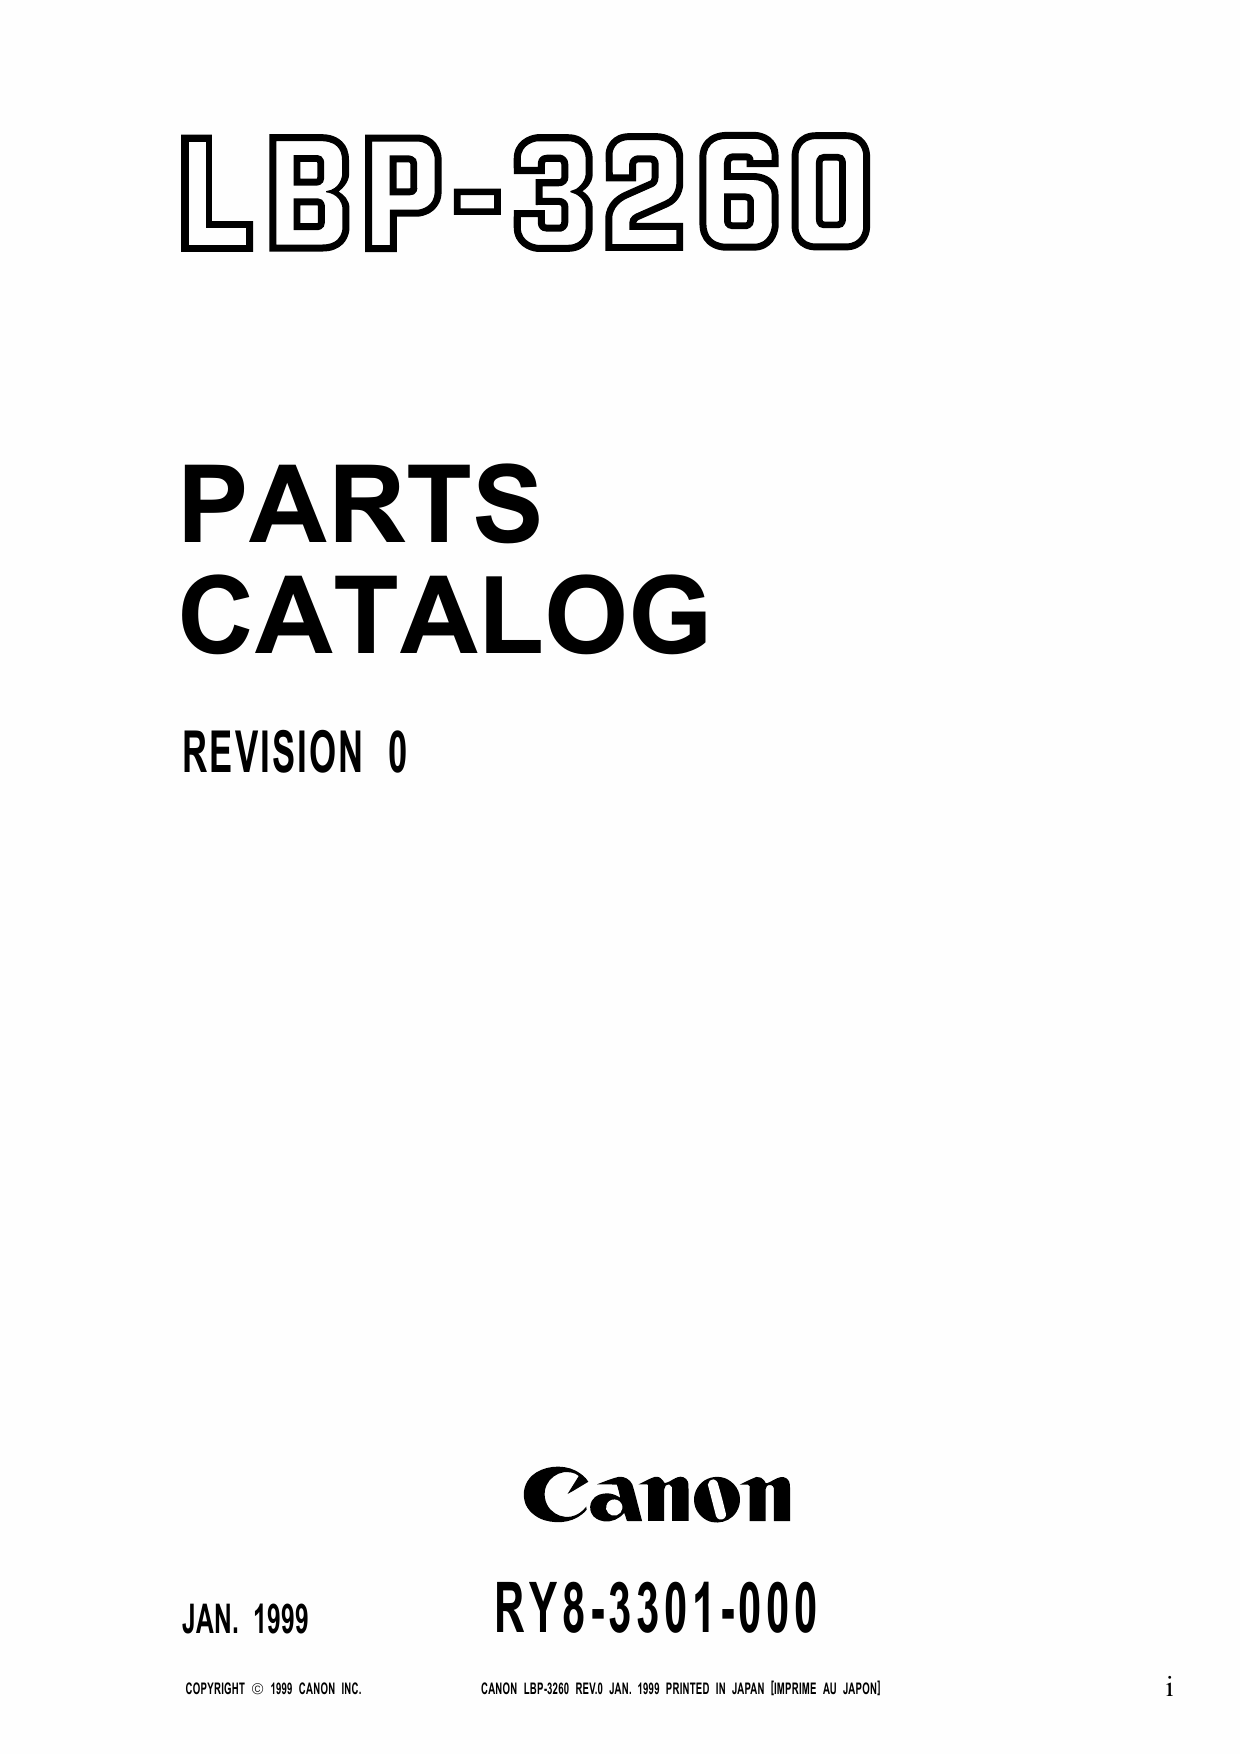 Canon imageCLASS LBP-3260 Parts Catalog Manual-1